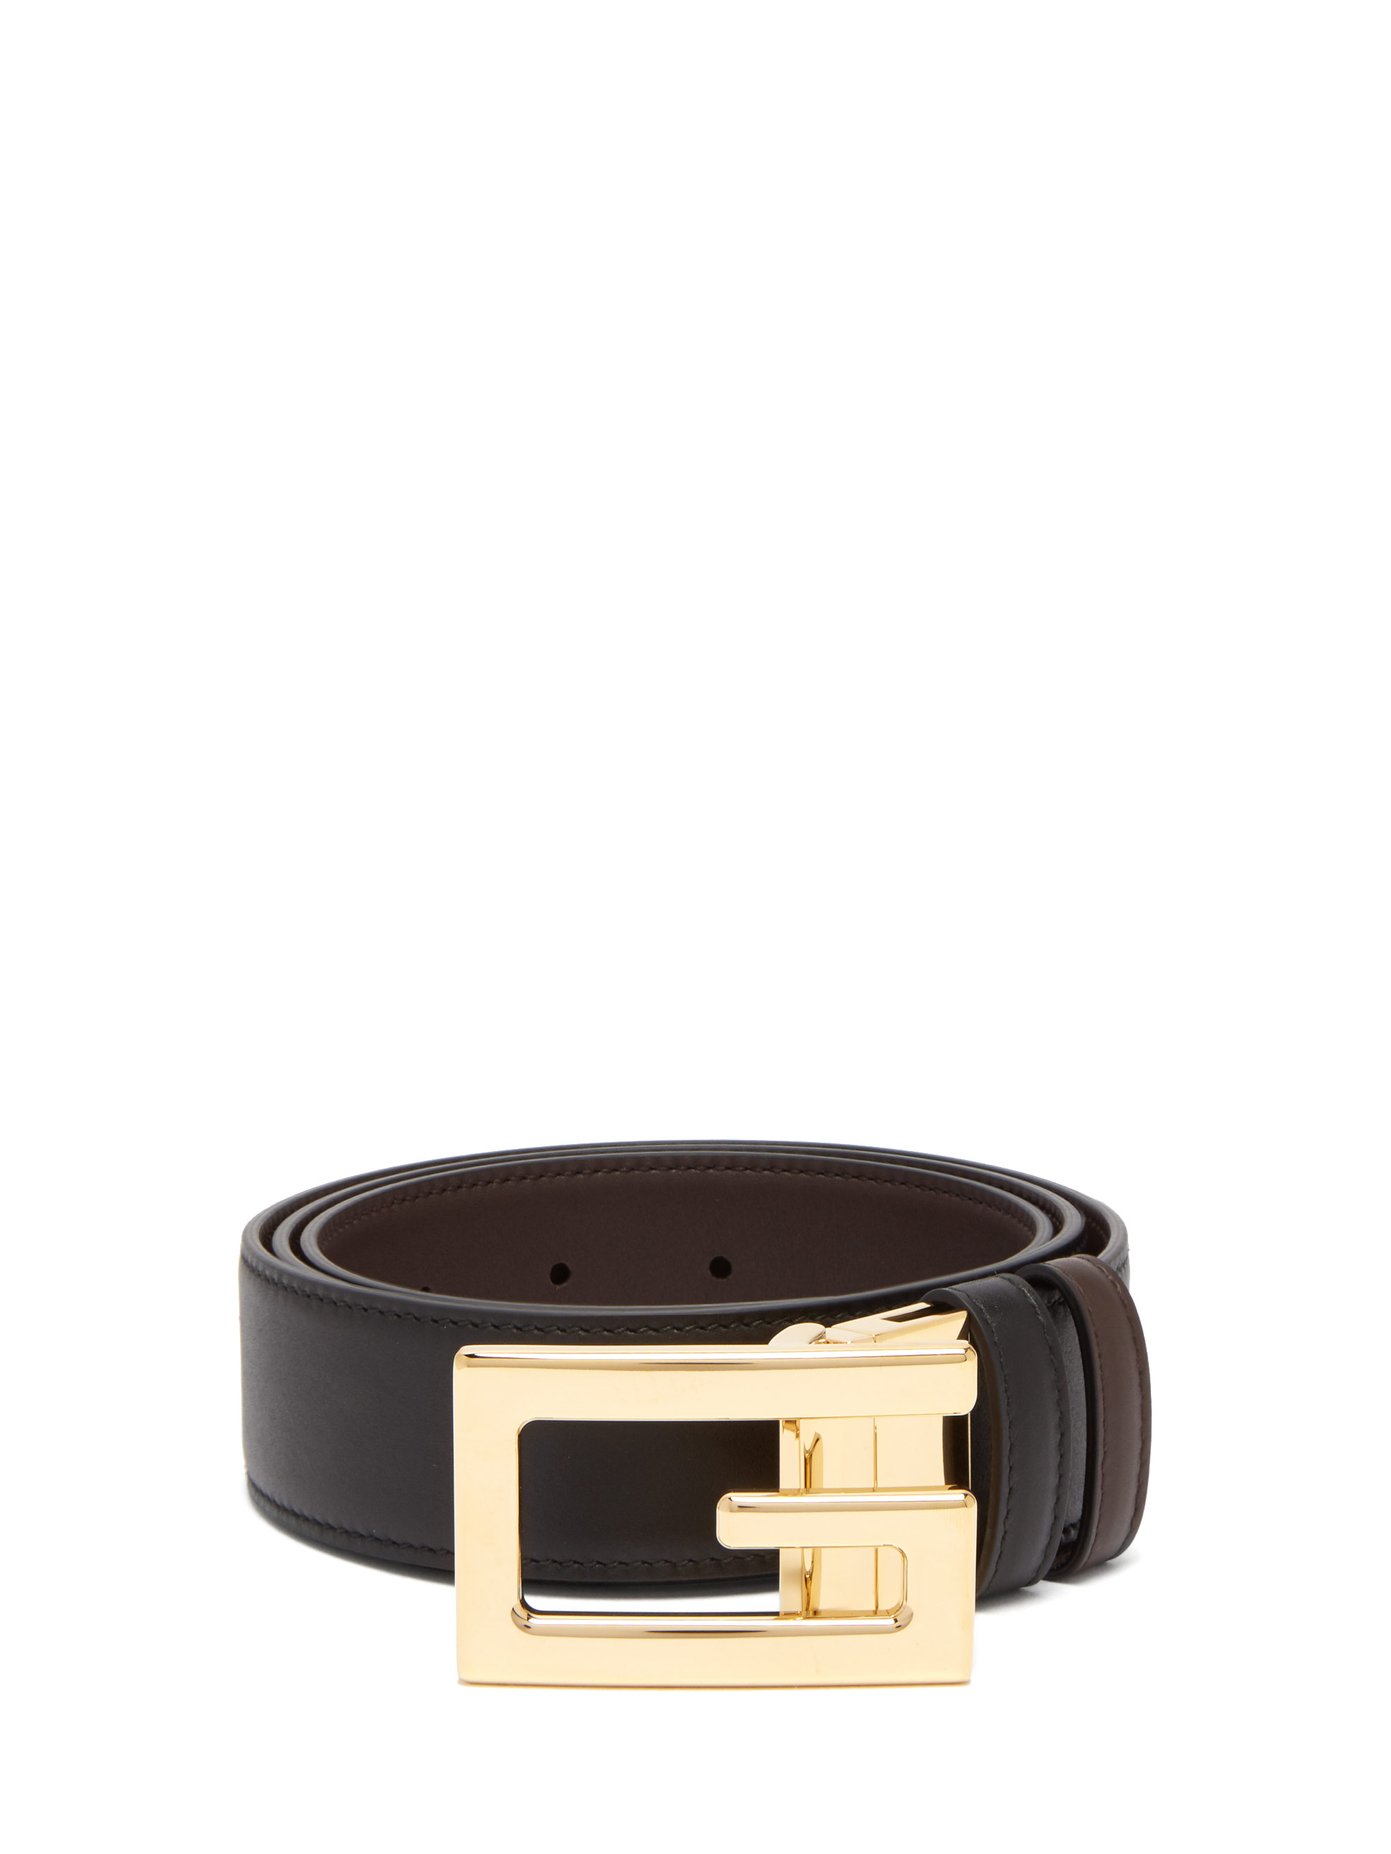 Square G leather belt | Gucci 